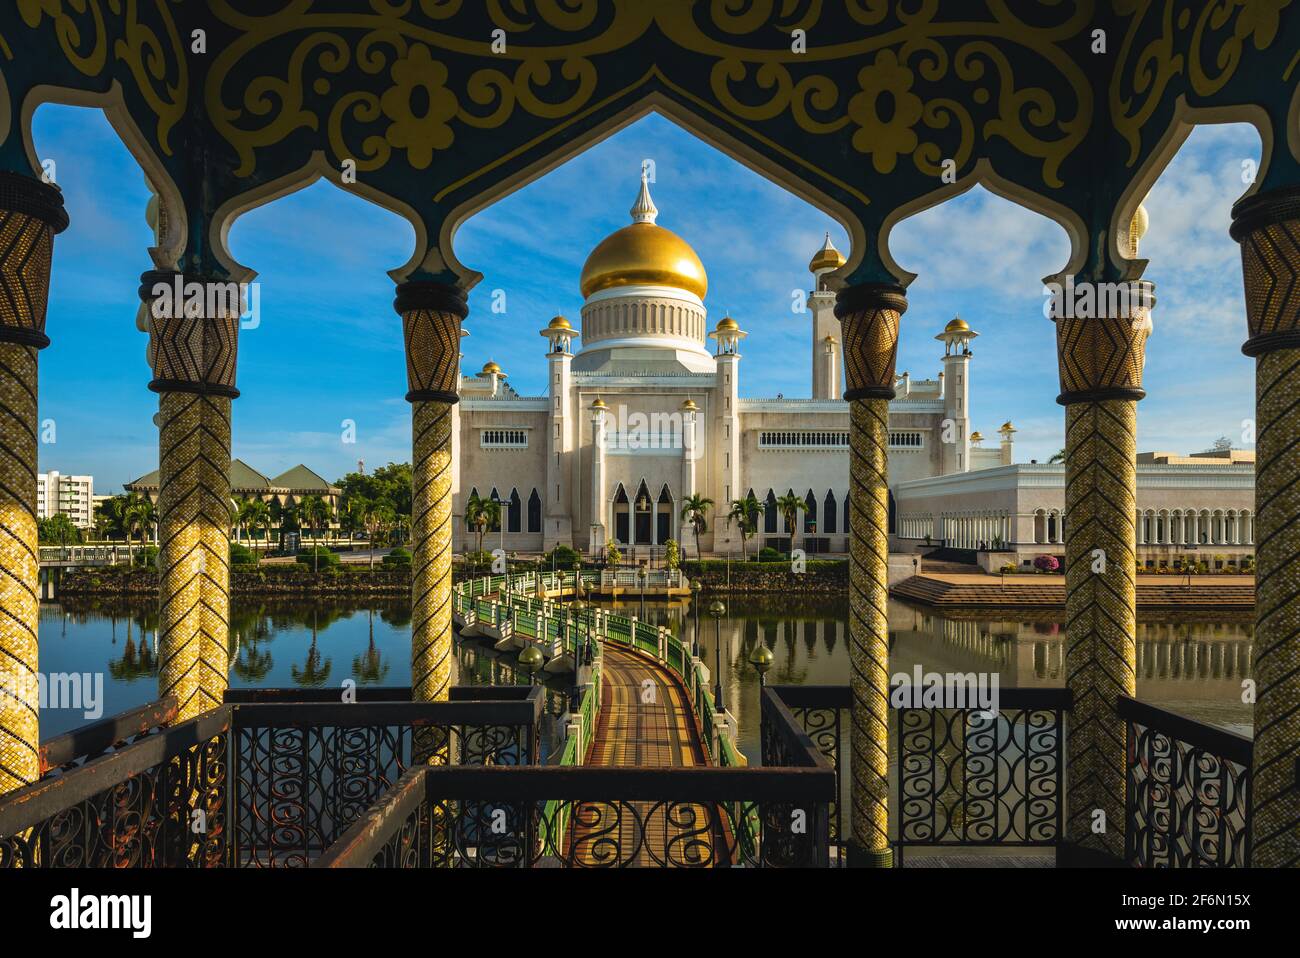 Omar Ali Saifuddien Mosque in Bandar Seri Begawan, brunei Stock Photo